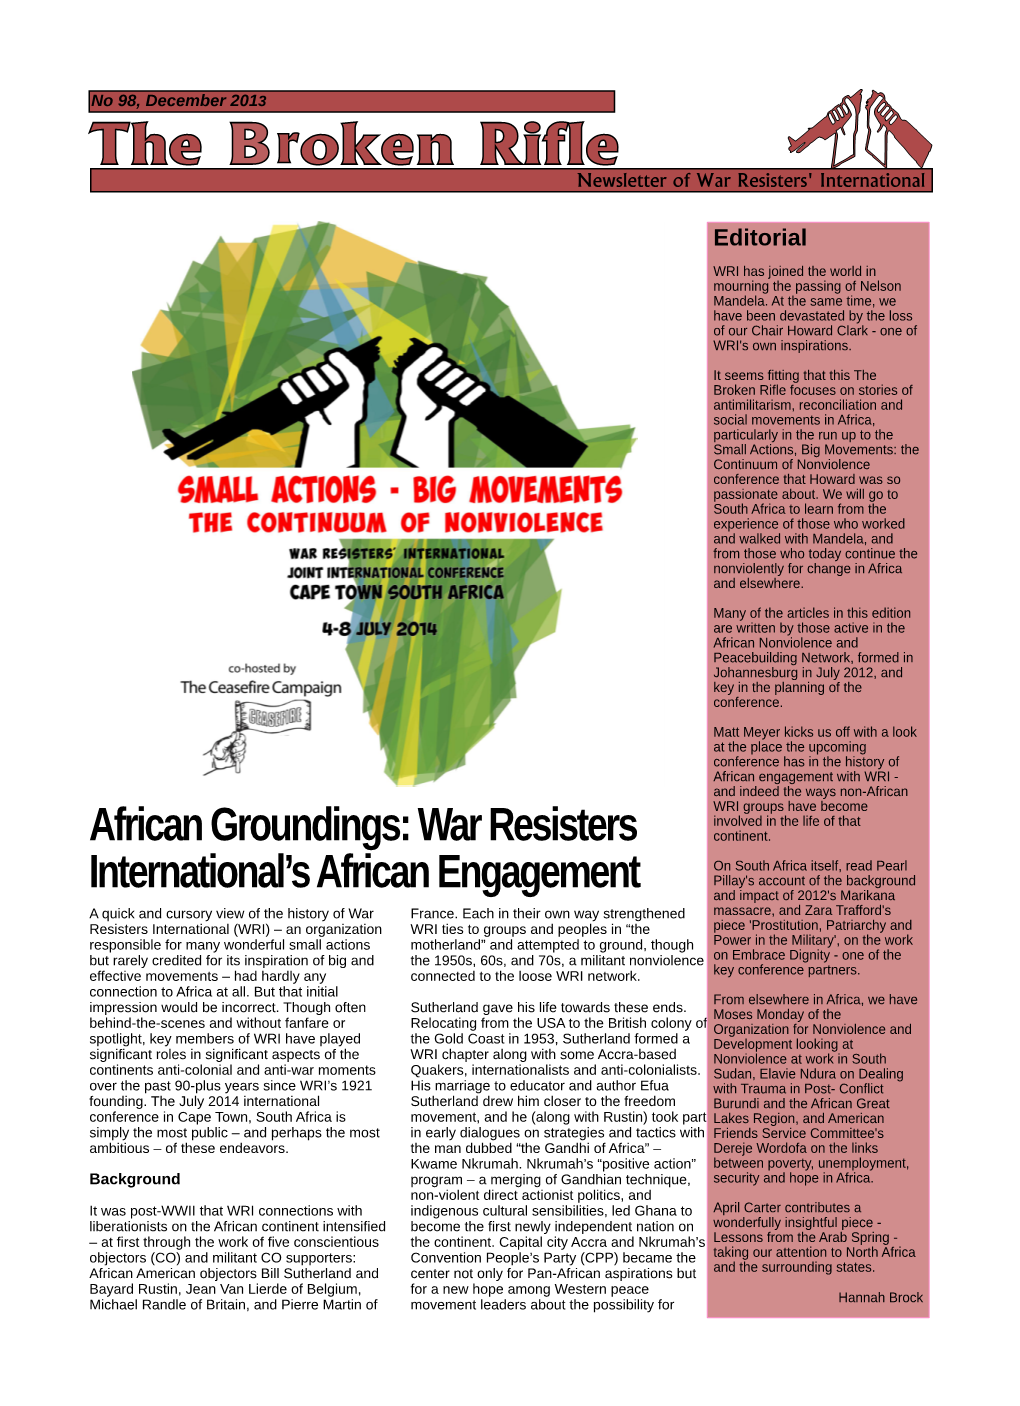 Africangroundings:Warresisters International'safricanengagement